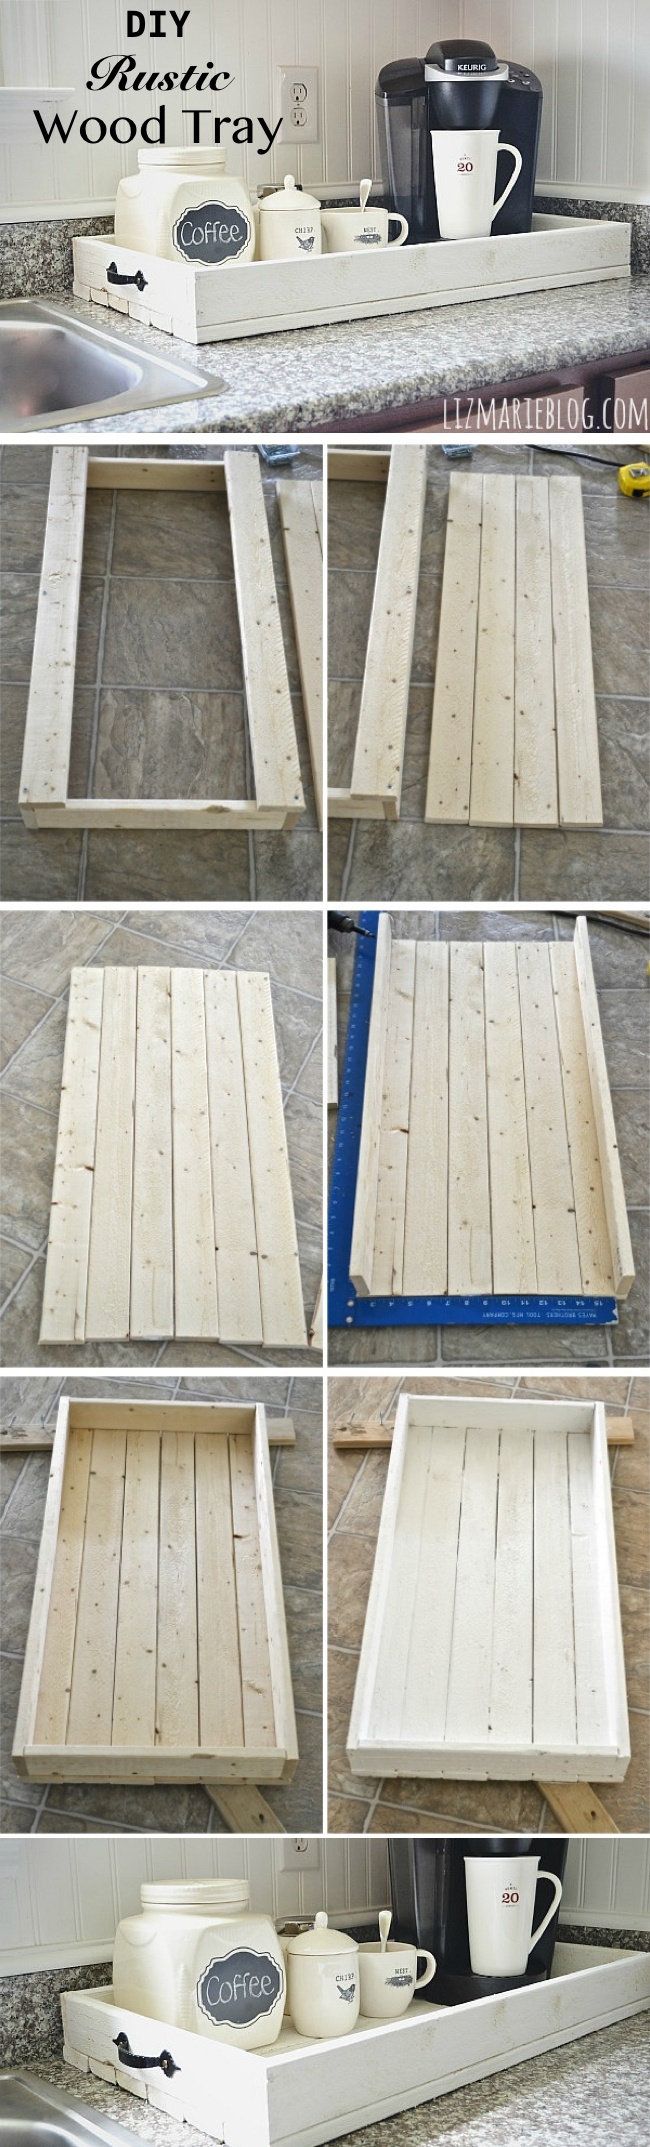 DIY Rustic Wood Tray